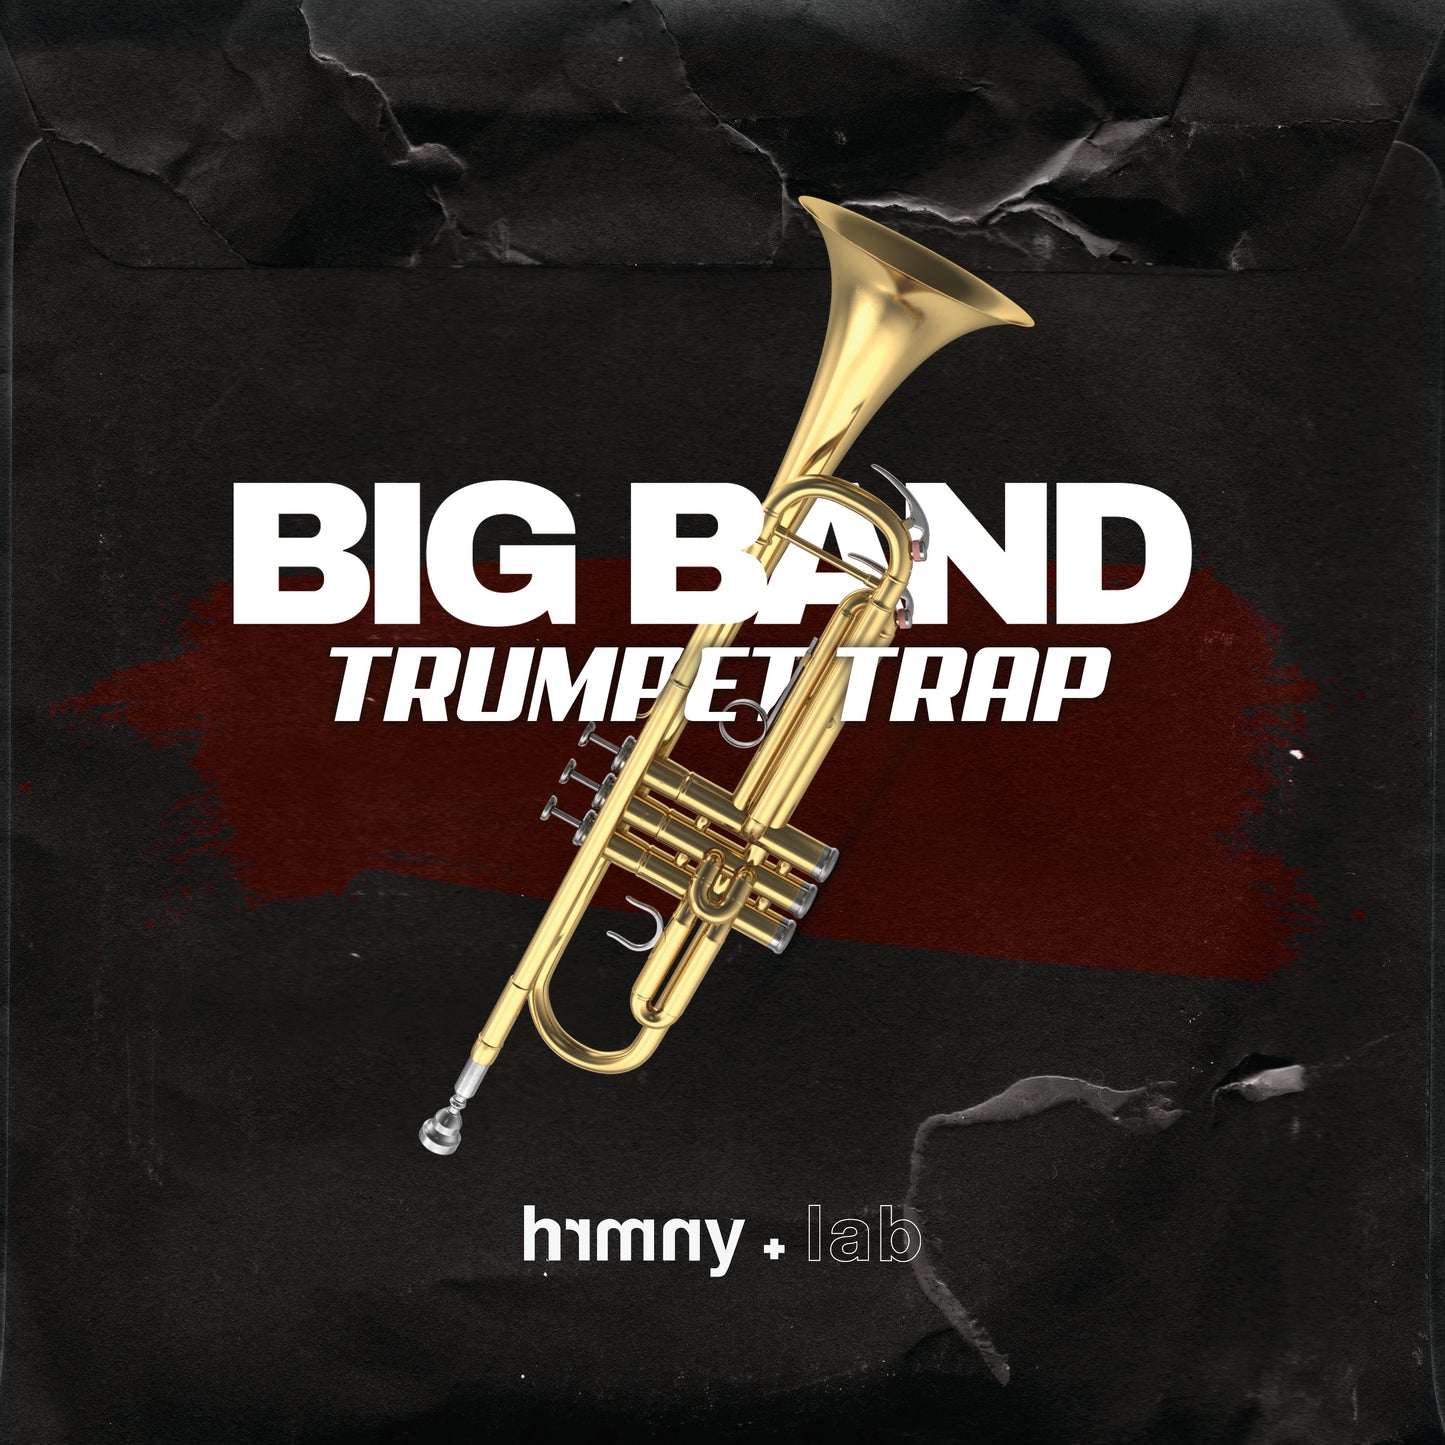 Big Band Trumpet Trap Royalty Free Sample Pack, Artwork